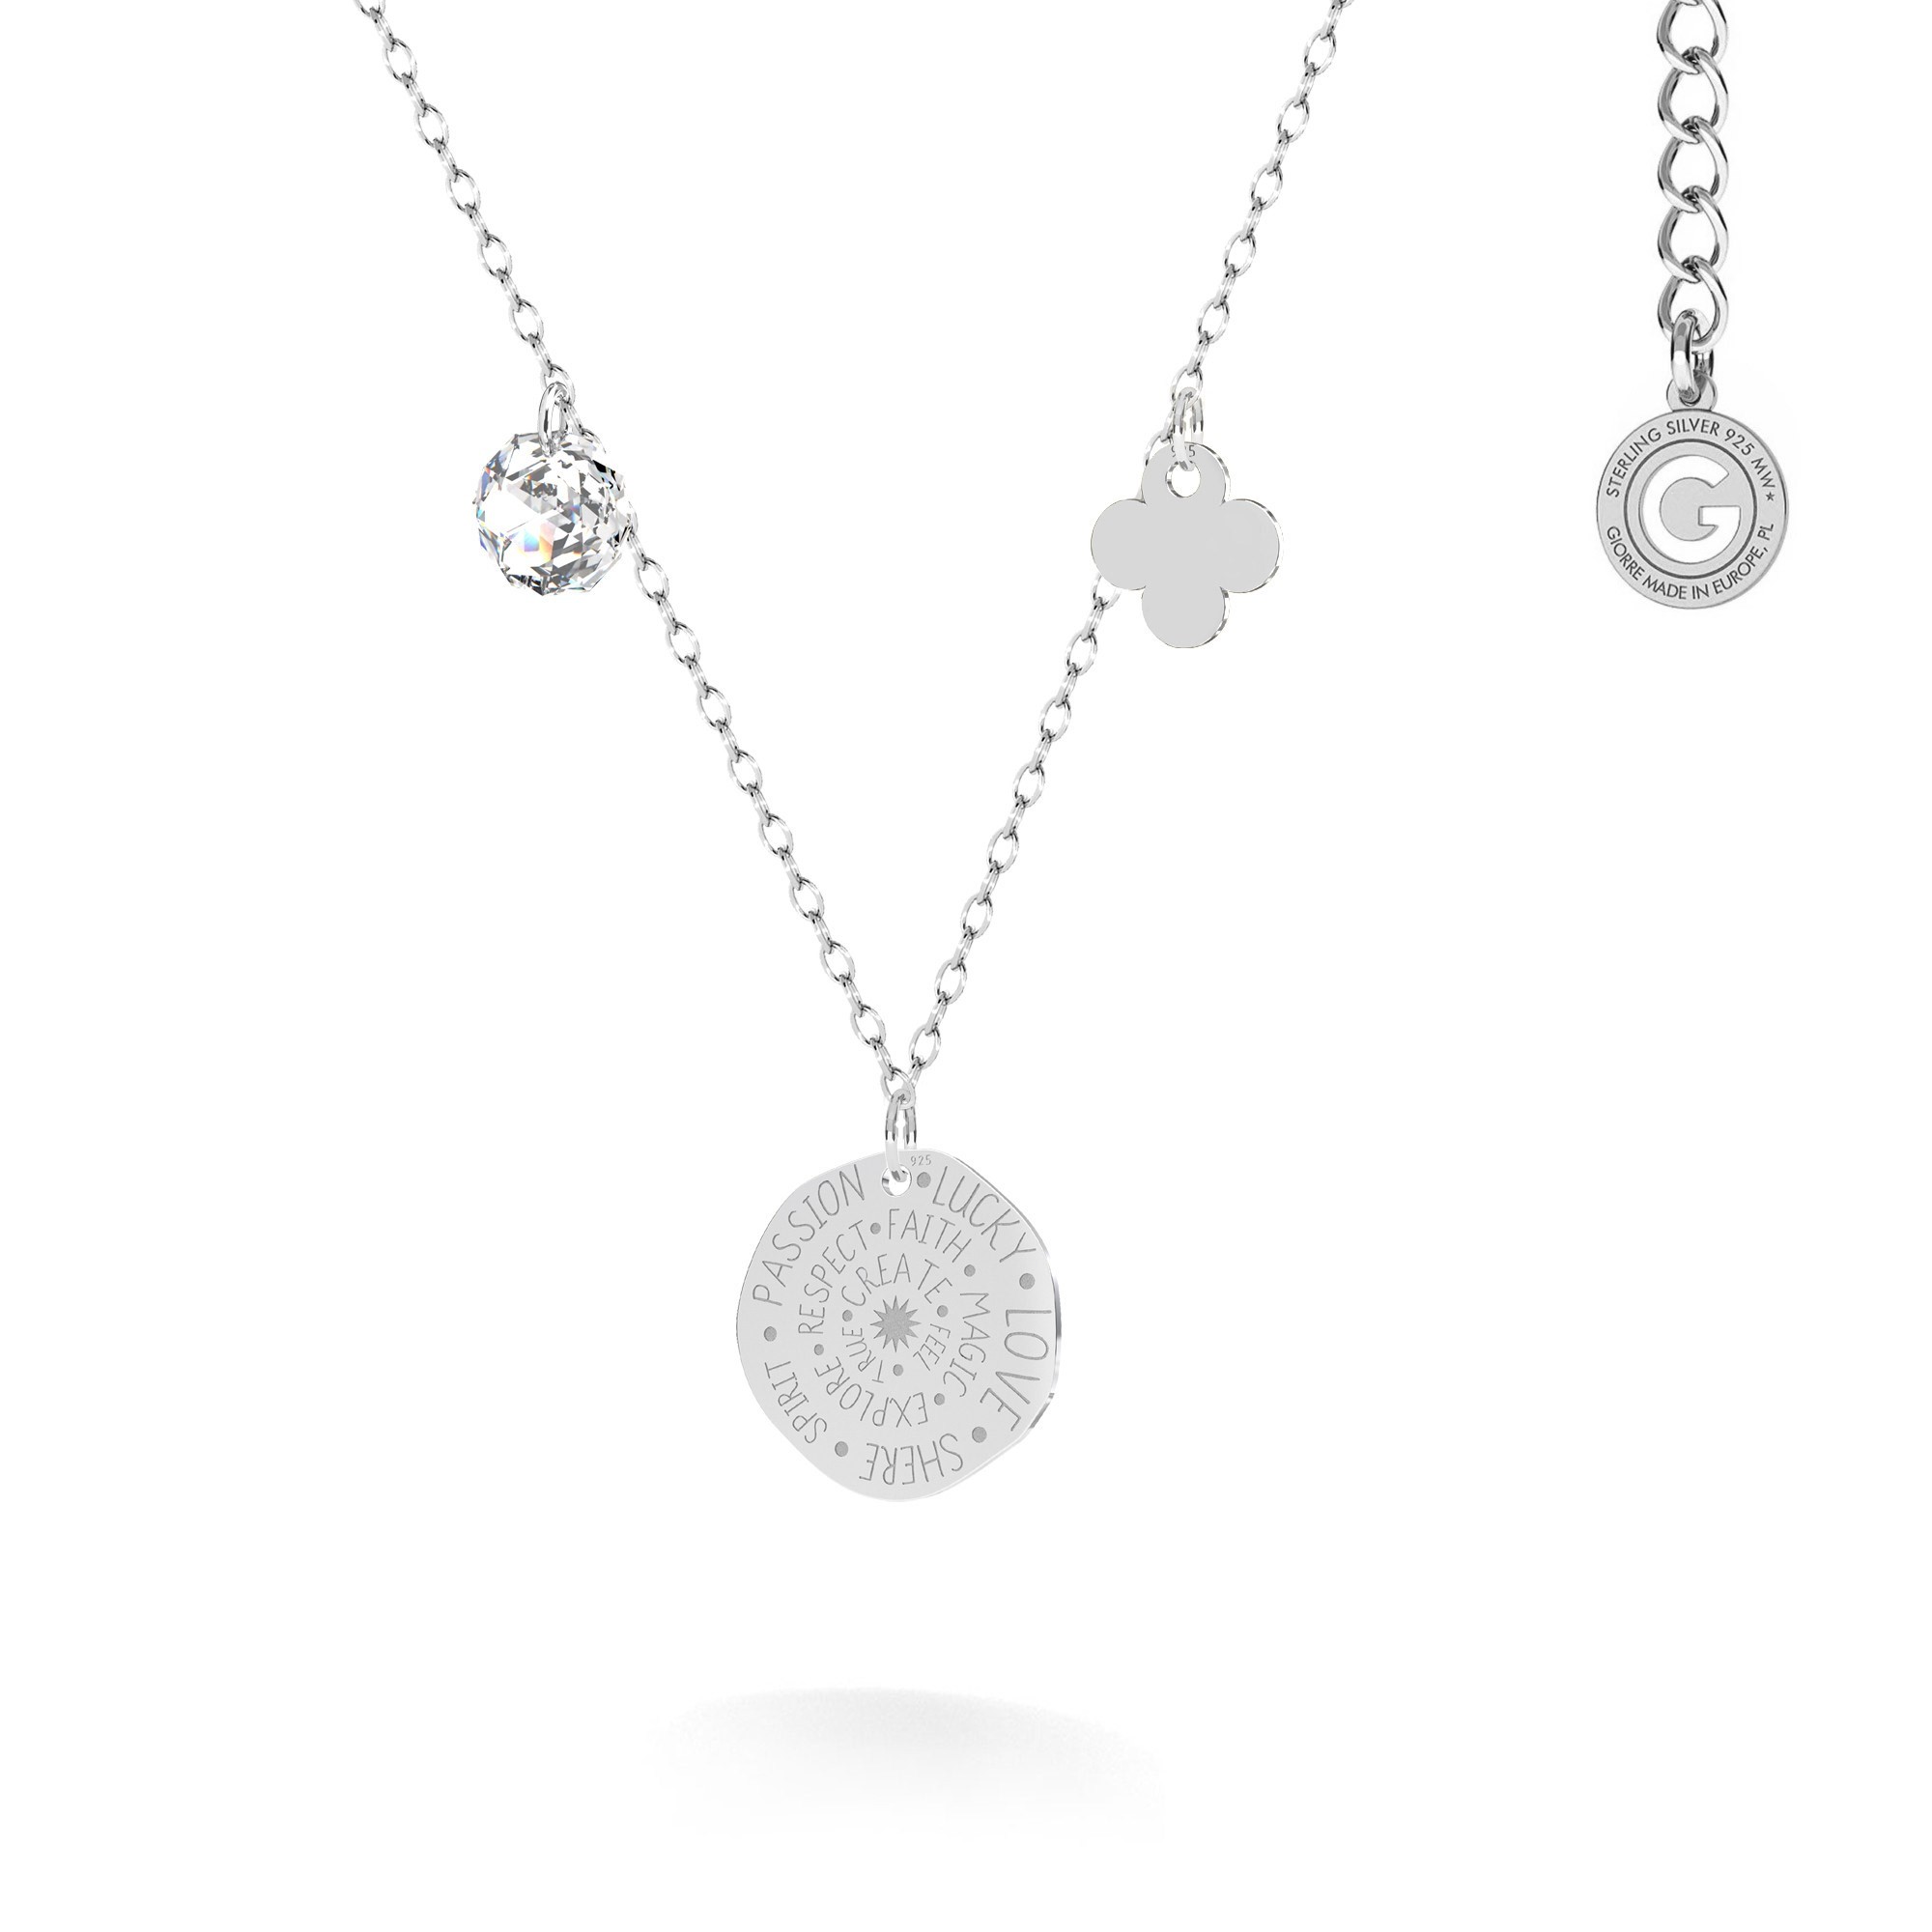 Silver star necklace with sun pendant, Swarovski crytal, T°ra'vel'' , silver 925